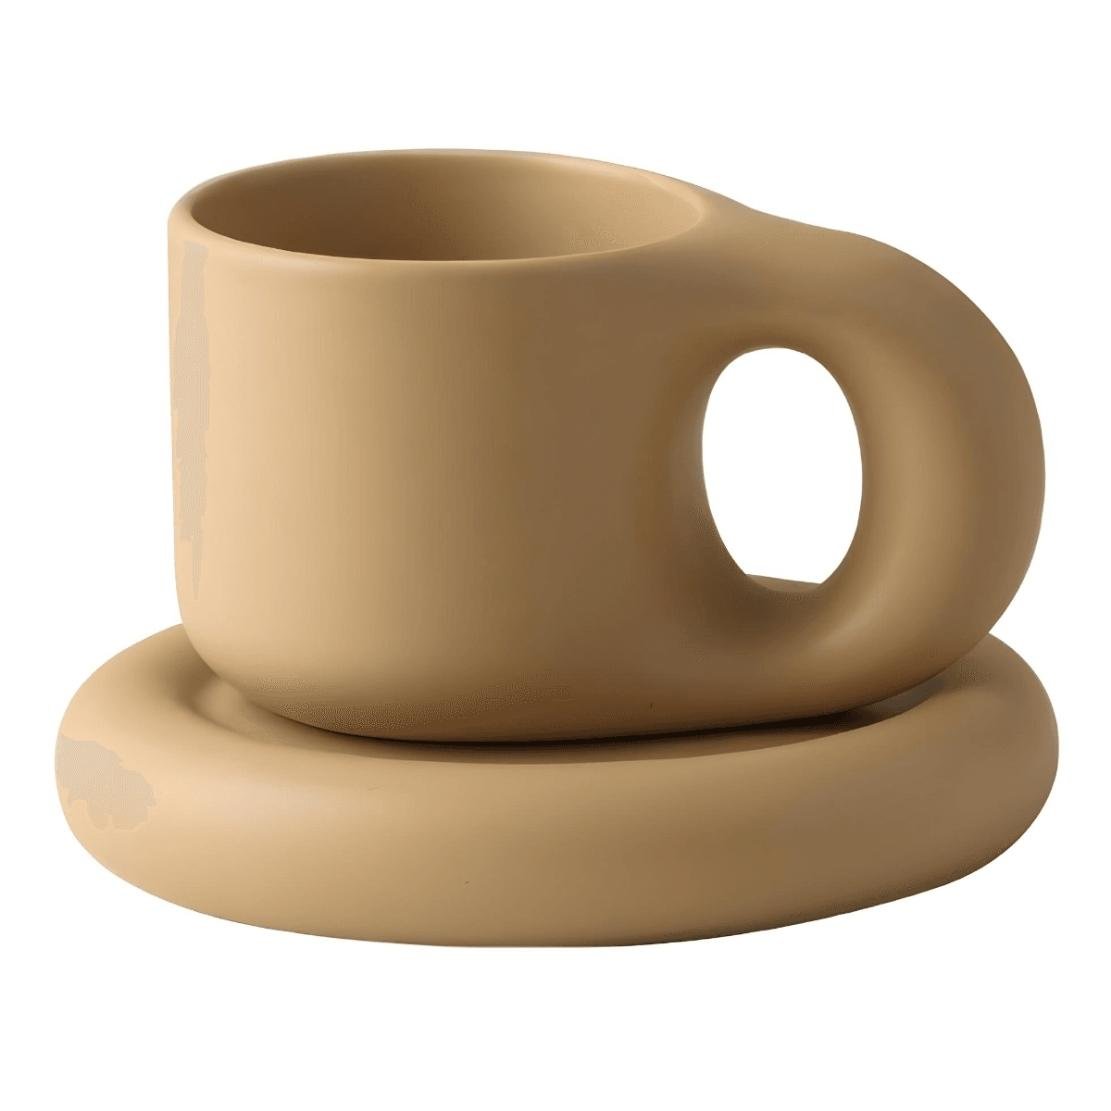 Beige chunky ceramic mug and saucer